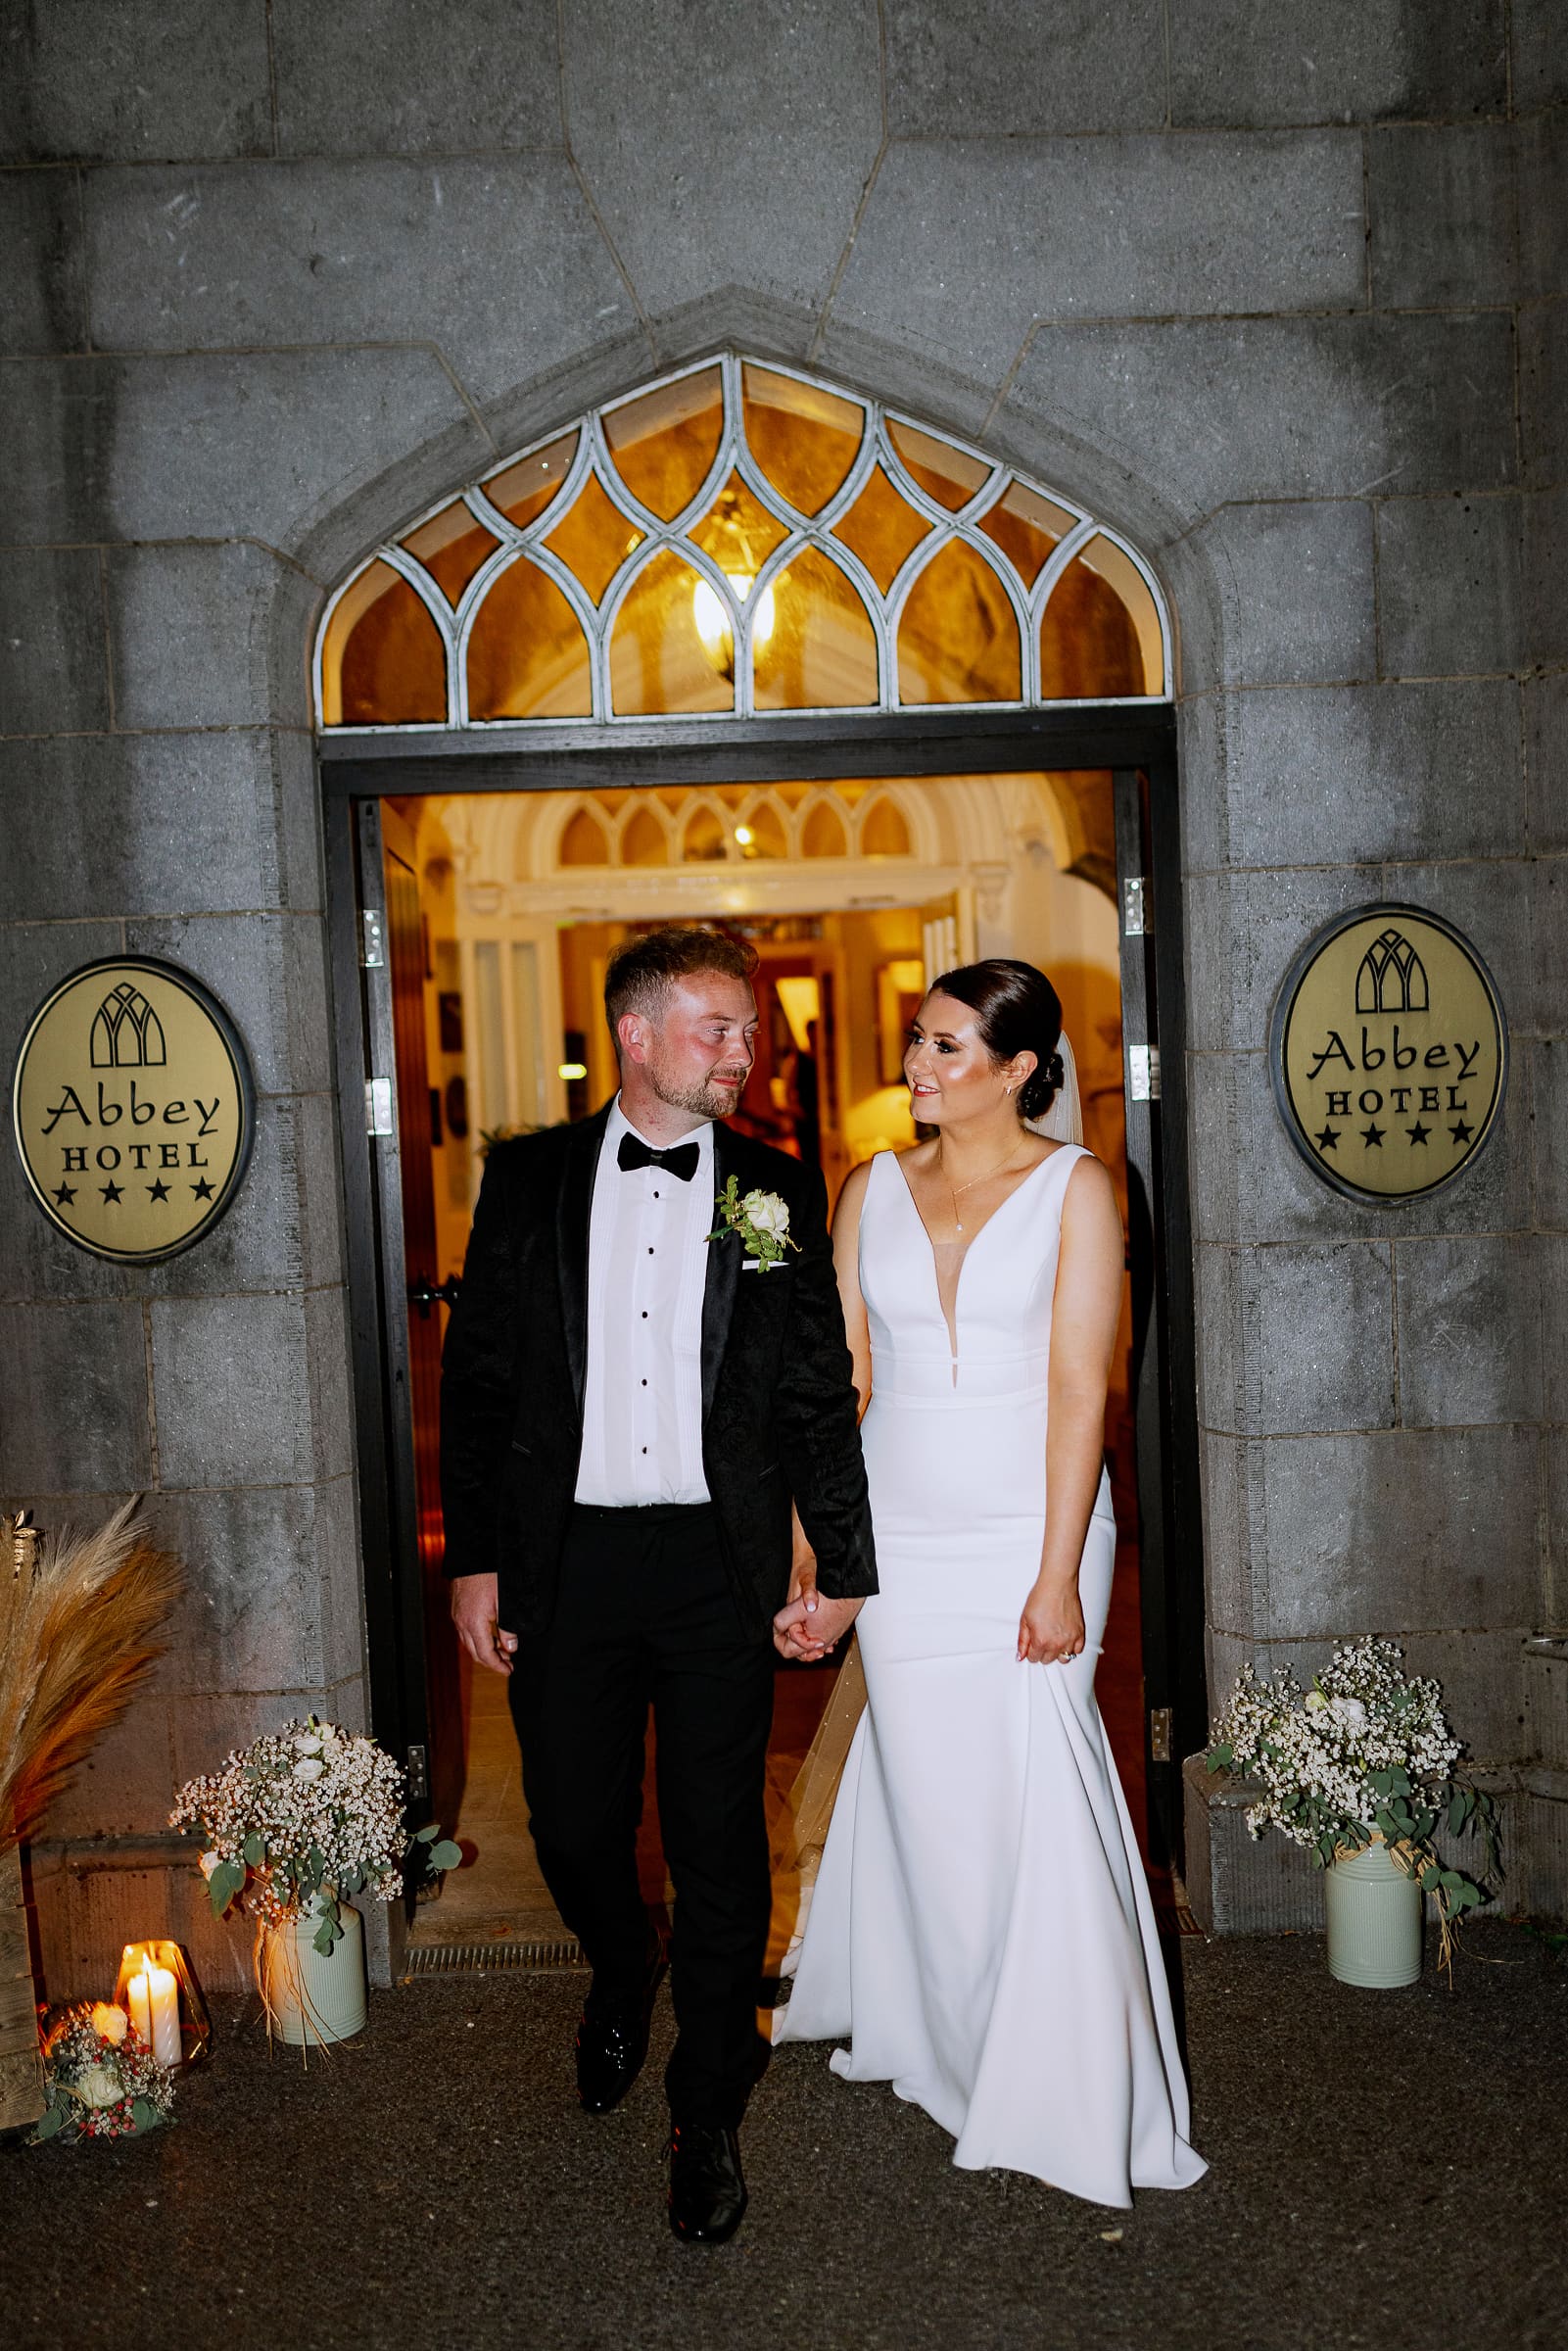 abbey hotel wedding night photo with flash